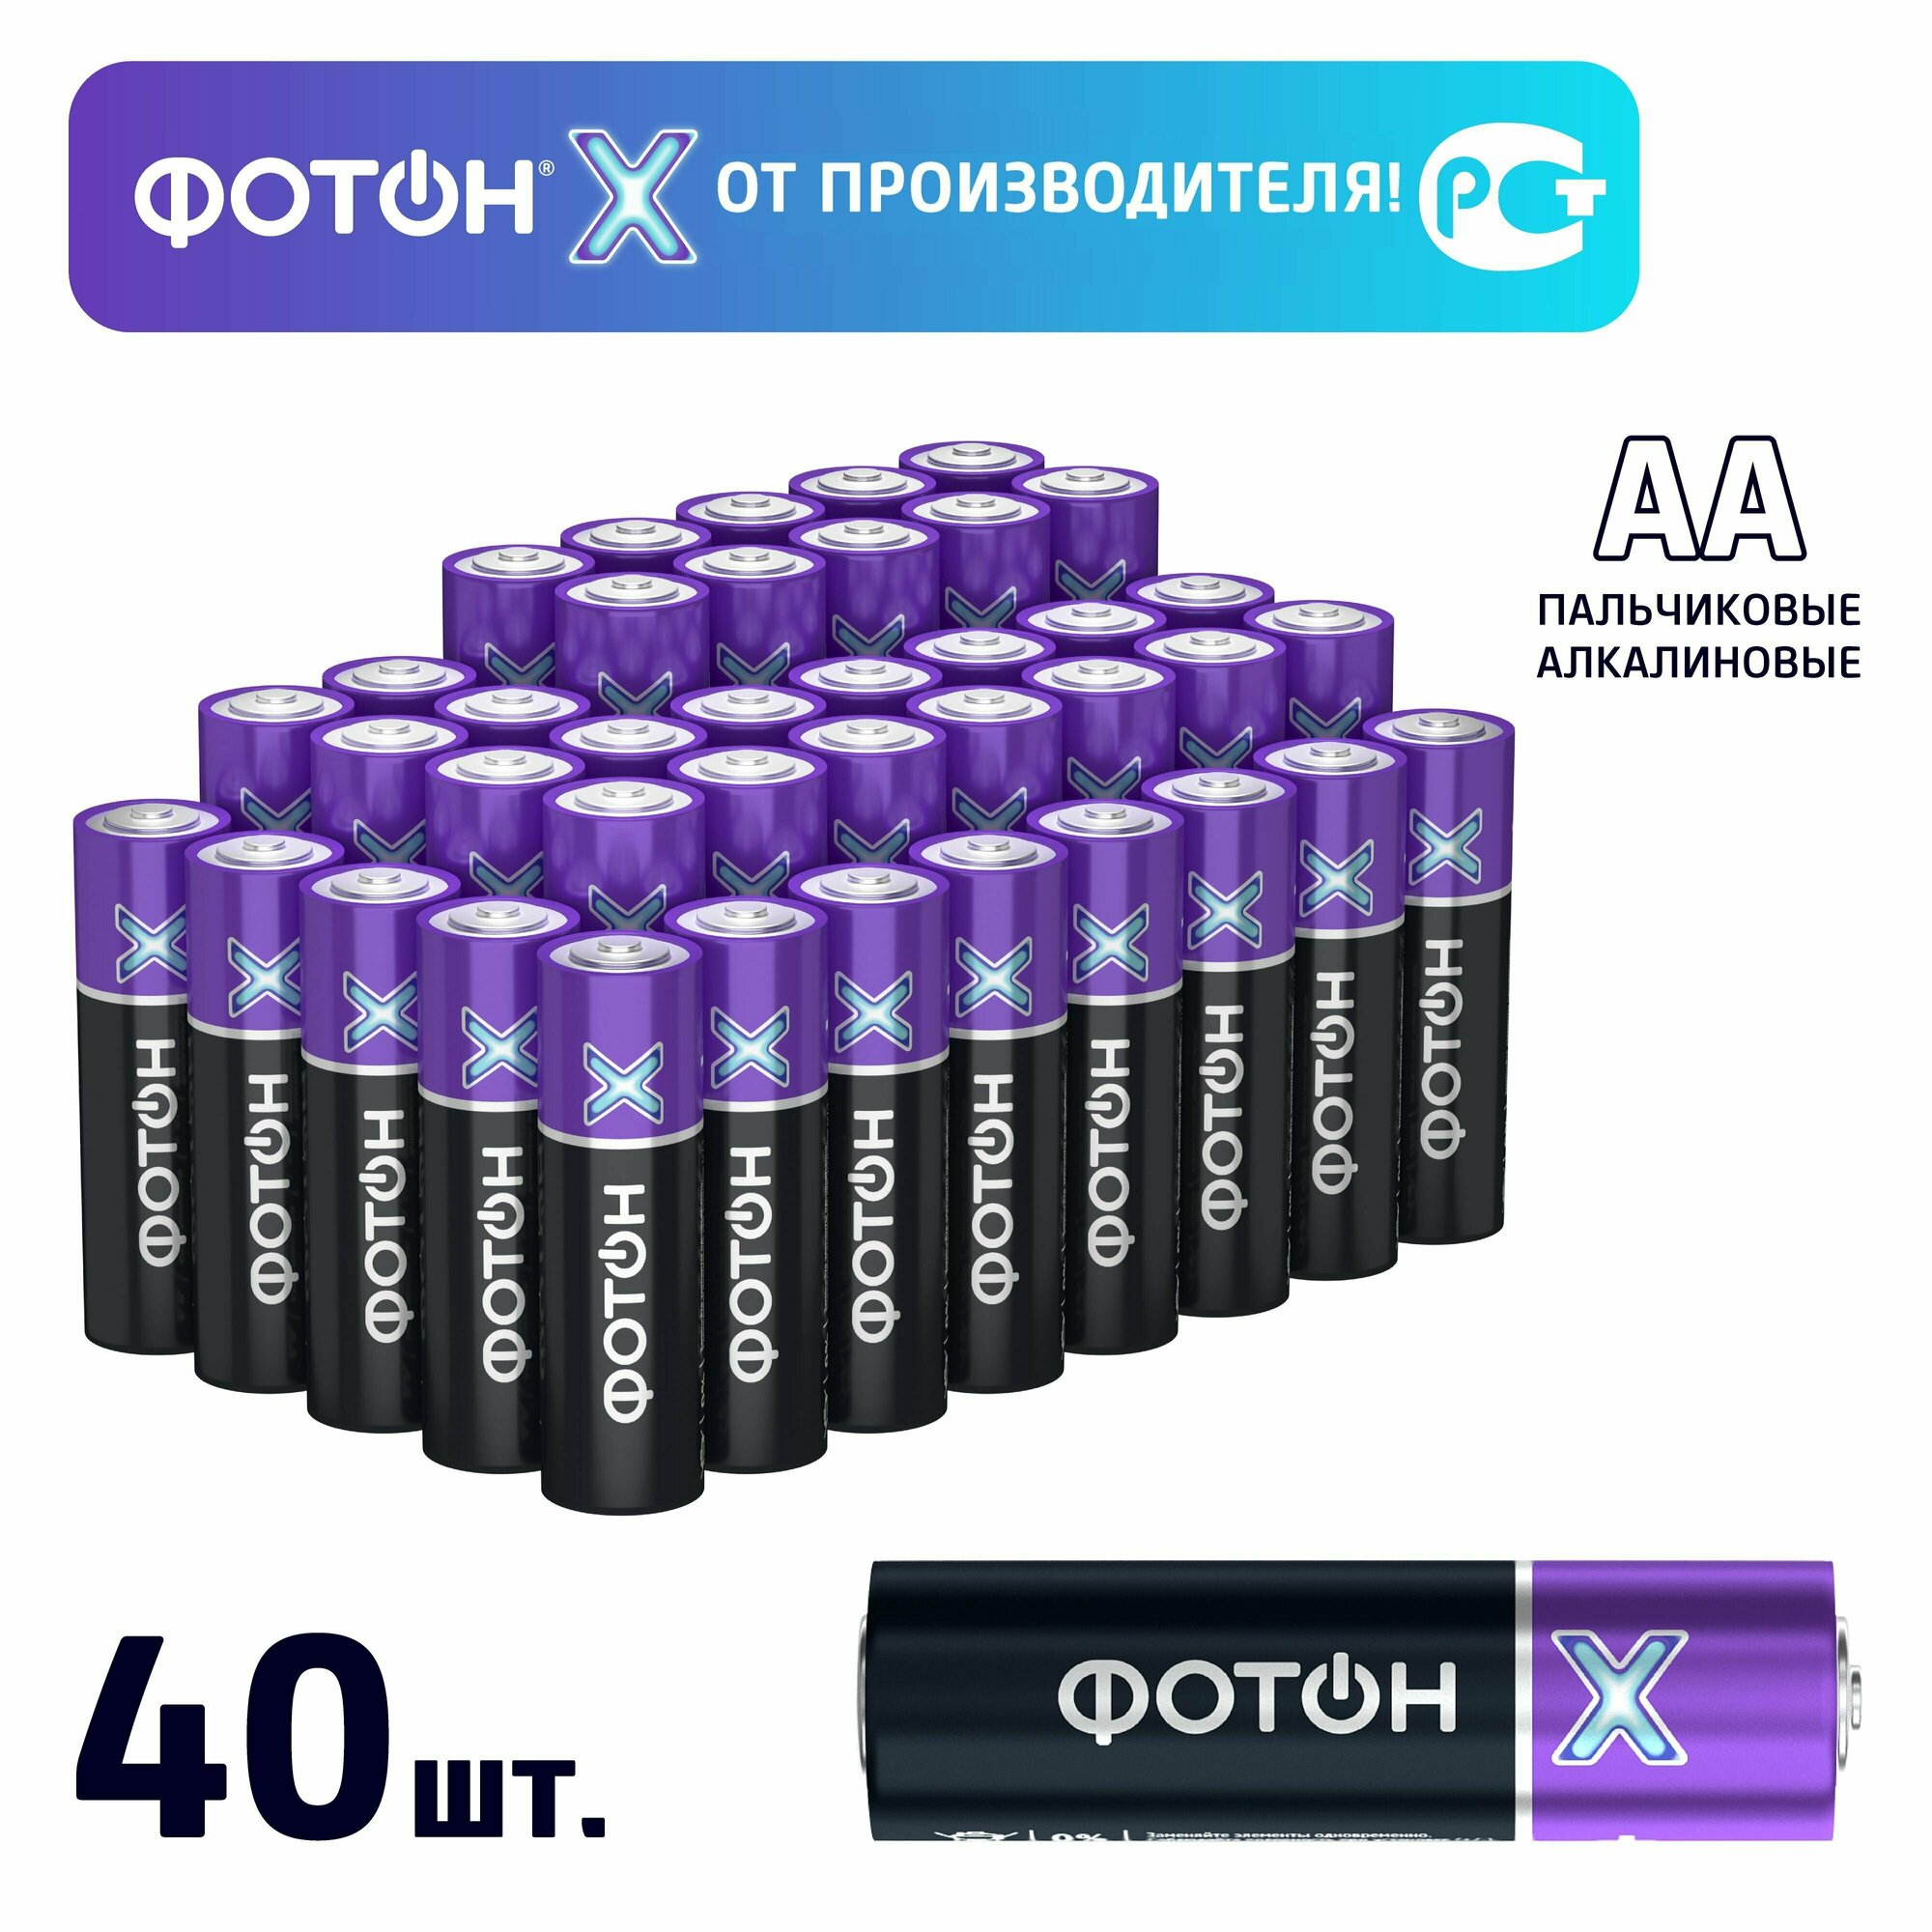 Упаковка батареек фотон - Х АА / LR6 (пальчиковые), 40 шт.